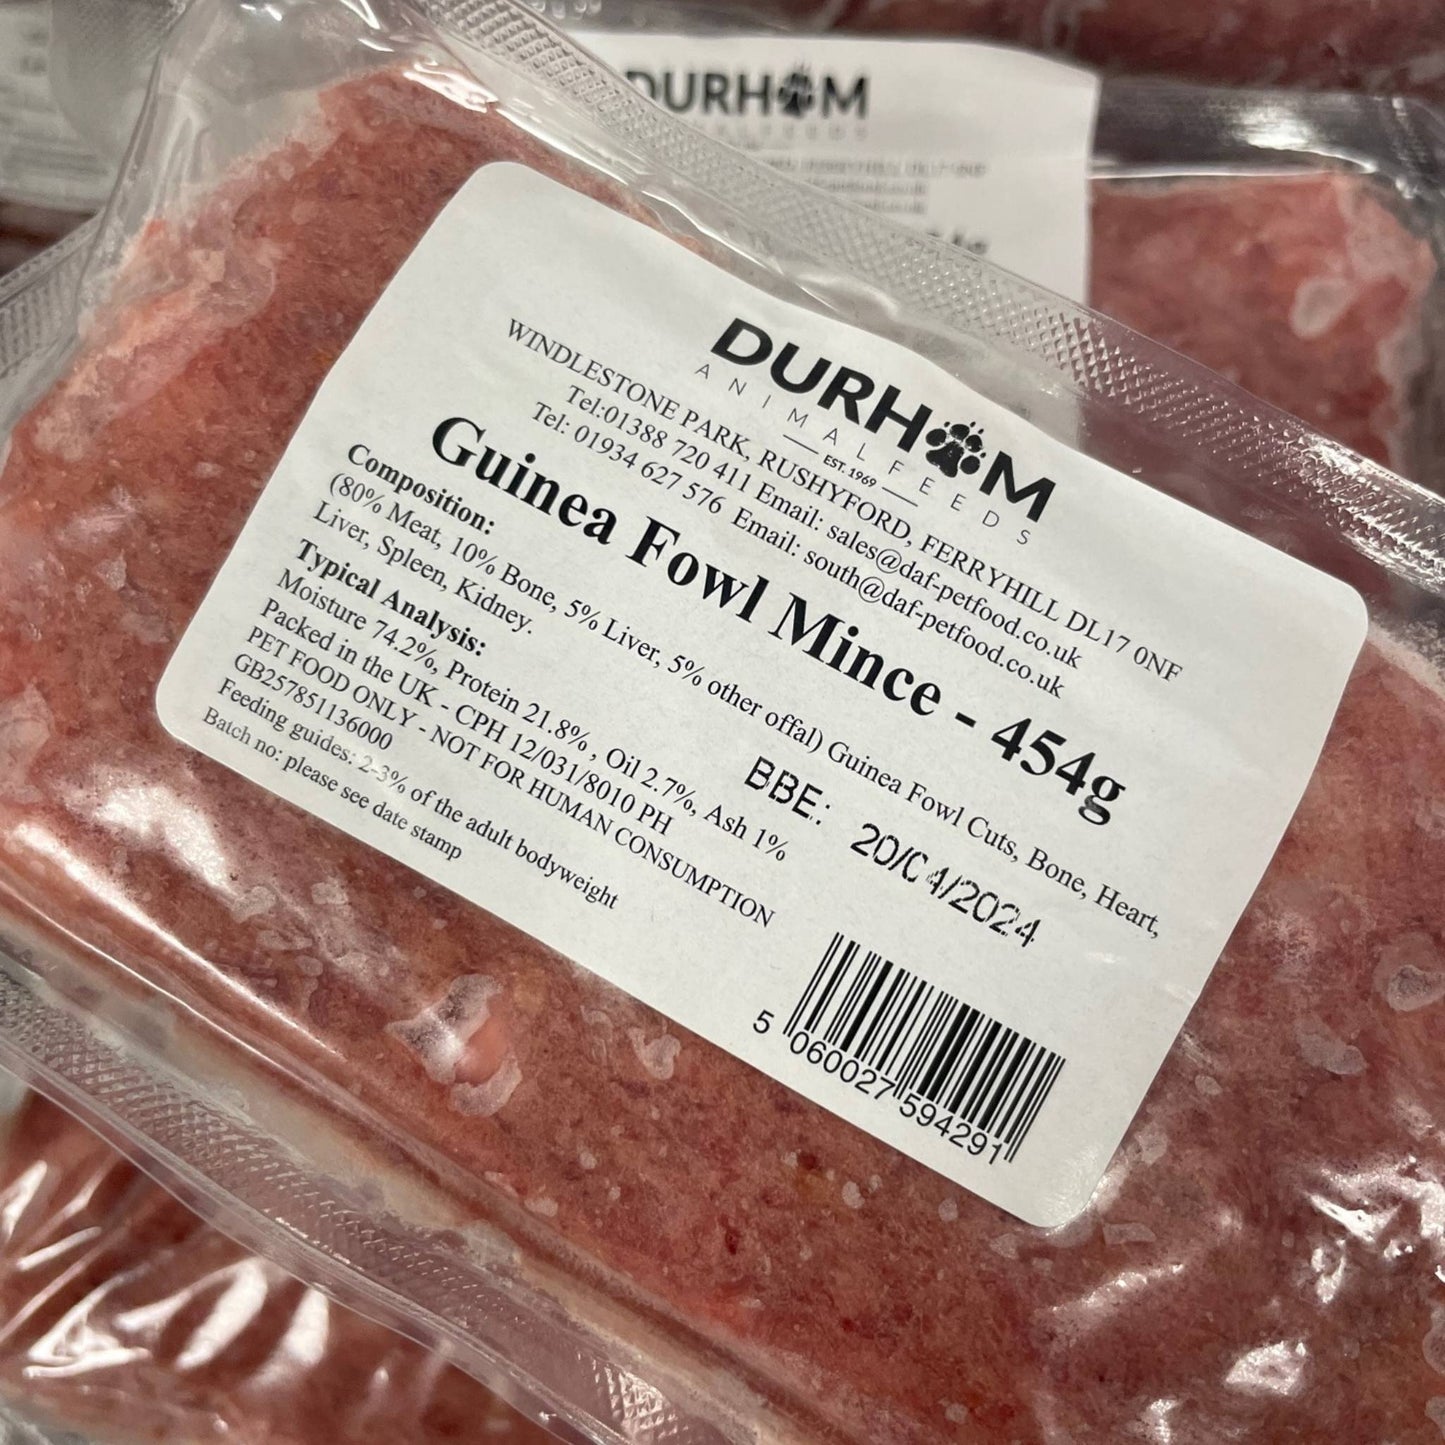 Durham Animal Feeds Guinea Fowl Mince Raw Dog Food